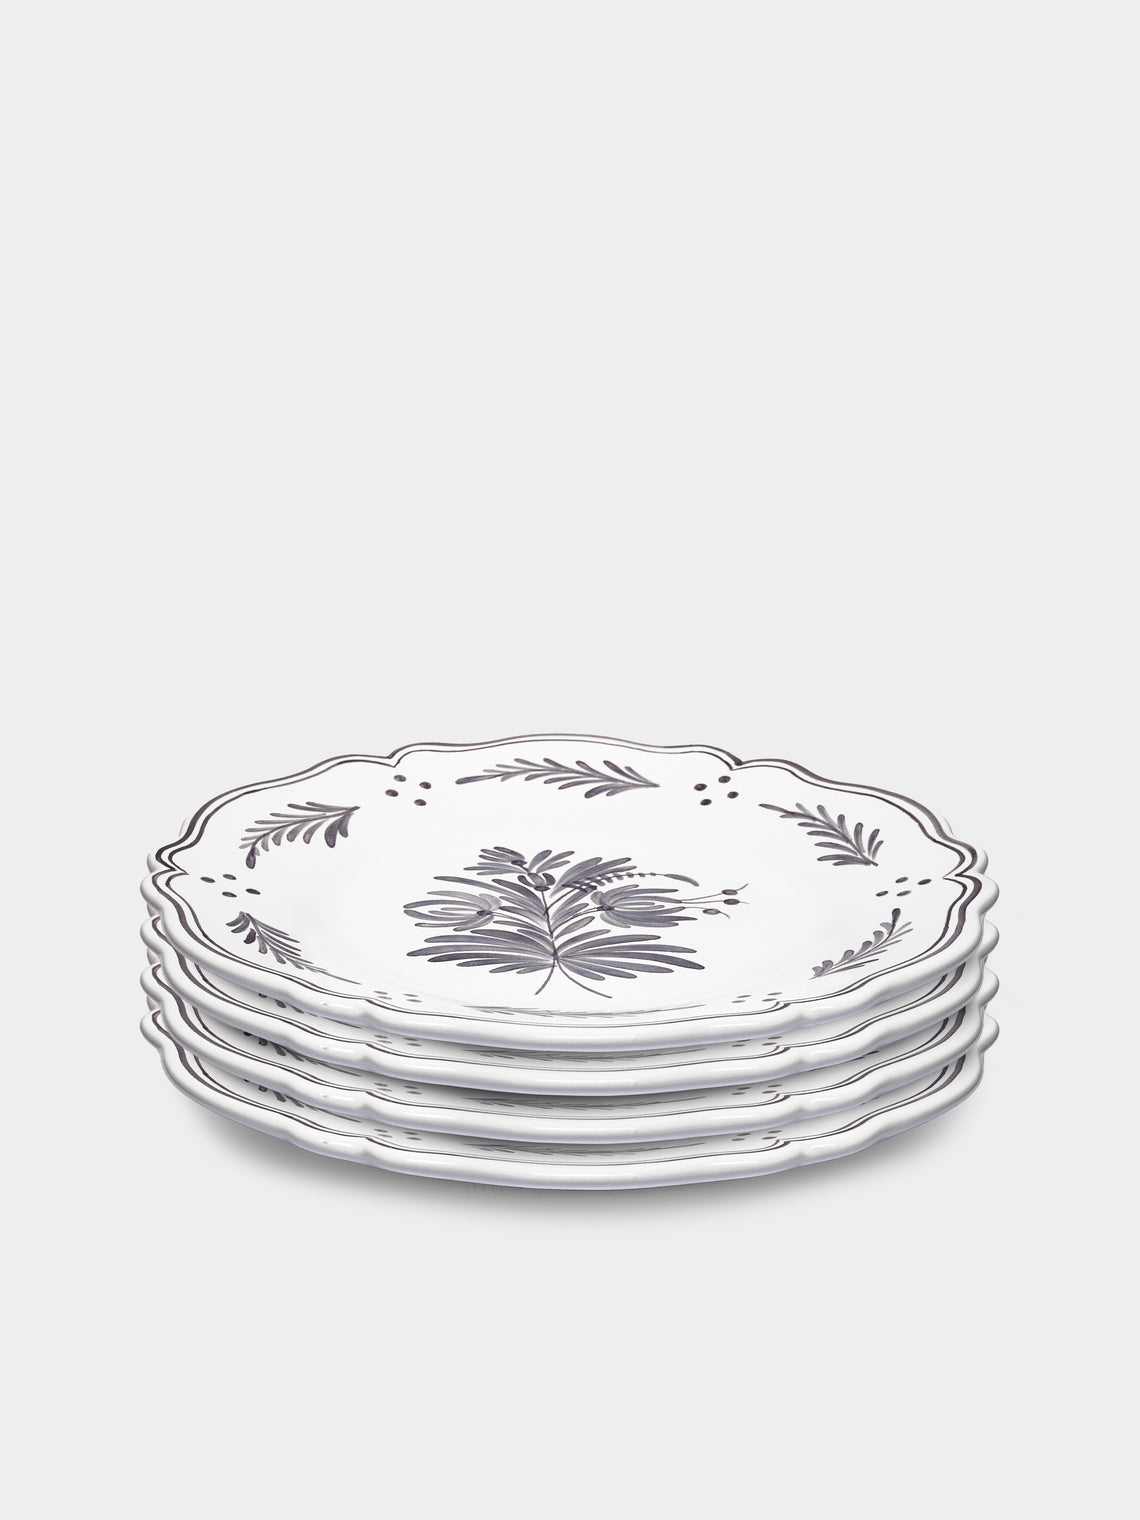 Bourg Joly Malicorne - Antique Fleurs Hand-Painted Ceramic Dessert Plates (Set of 4) -  - ABASK